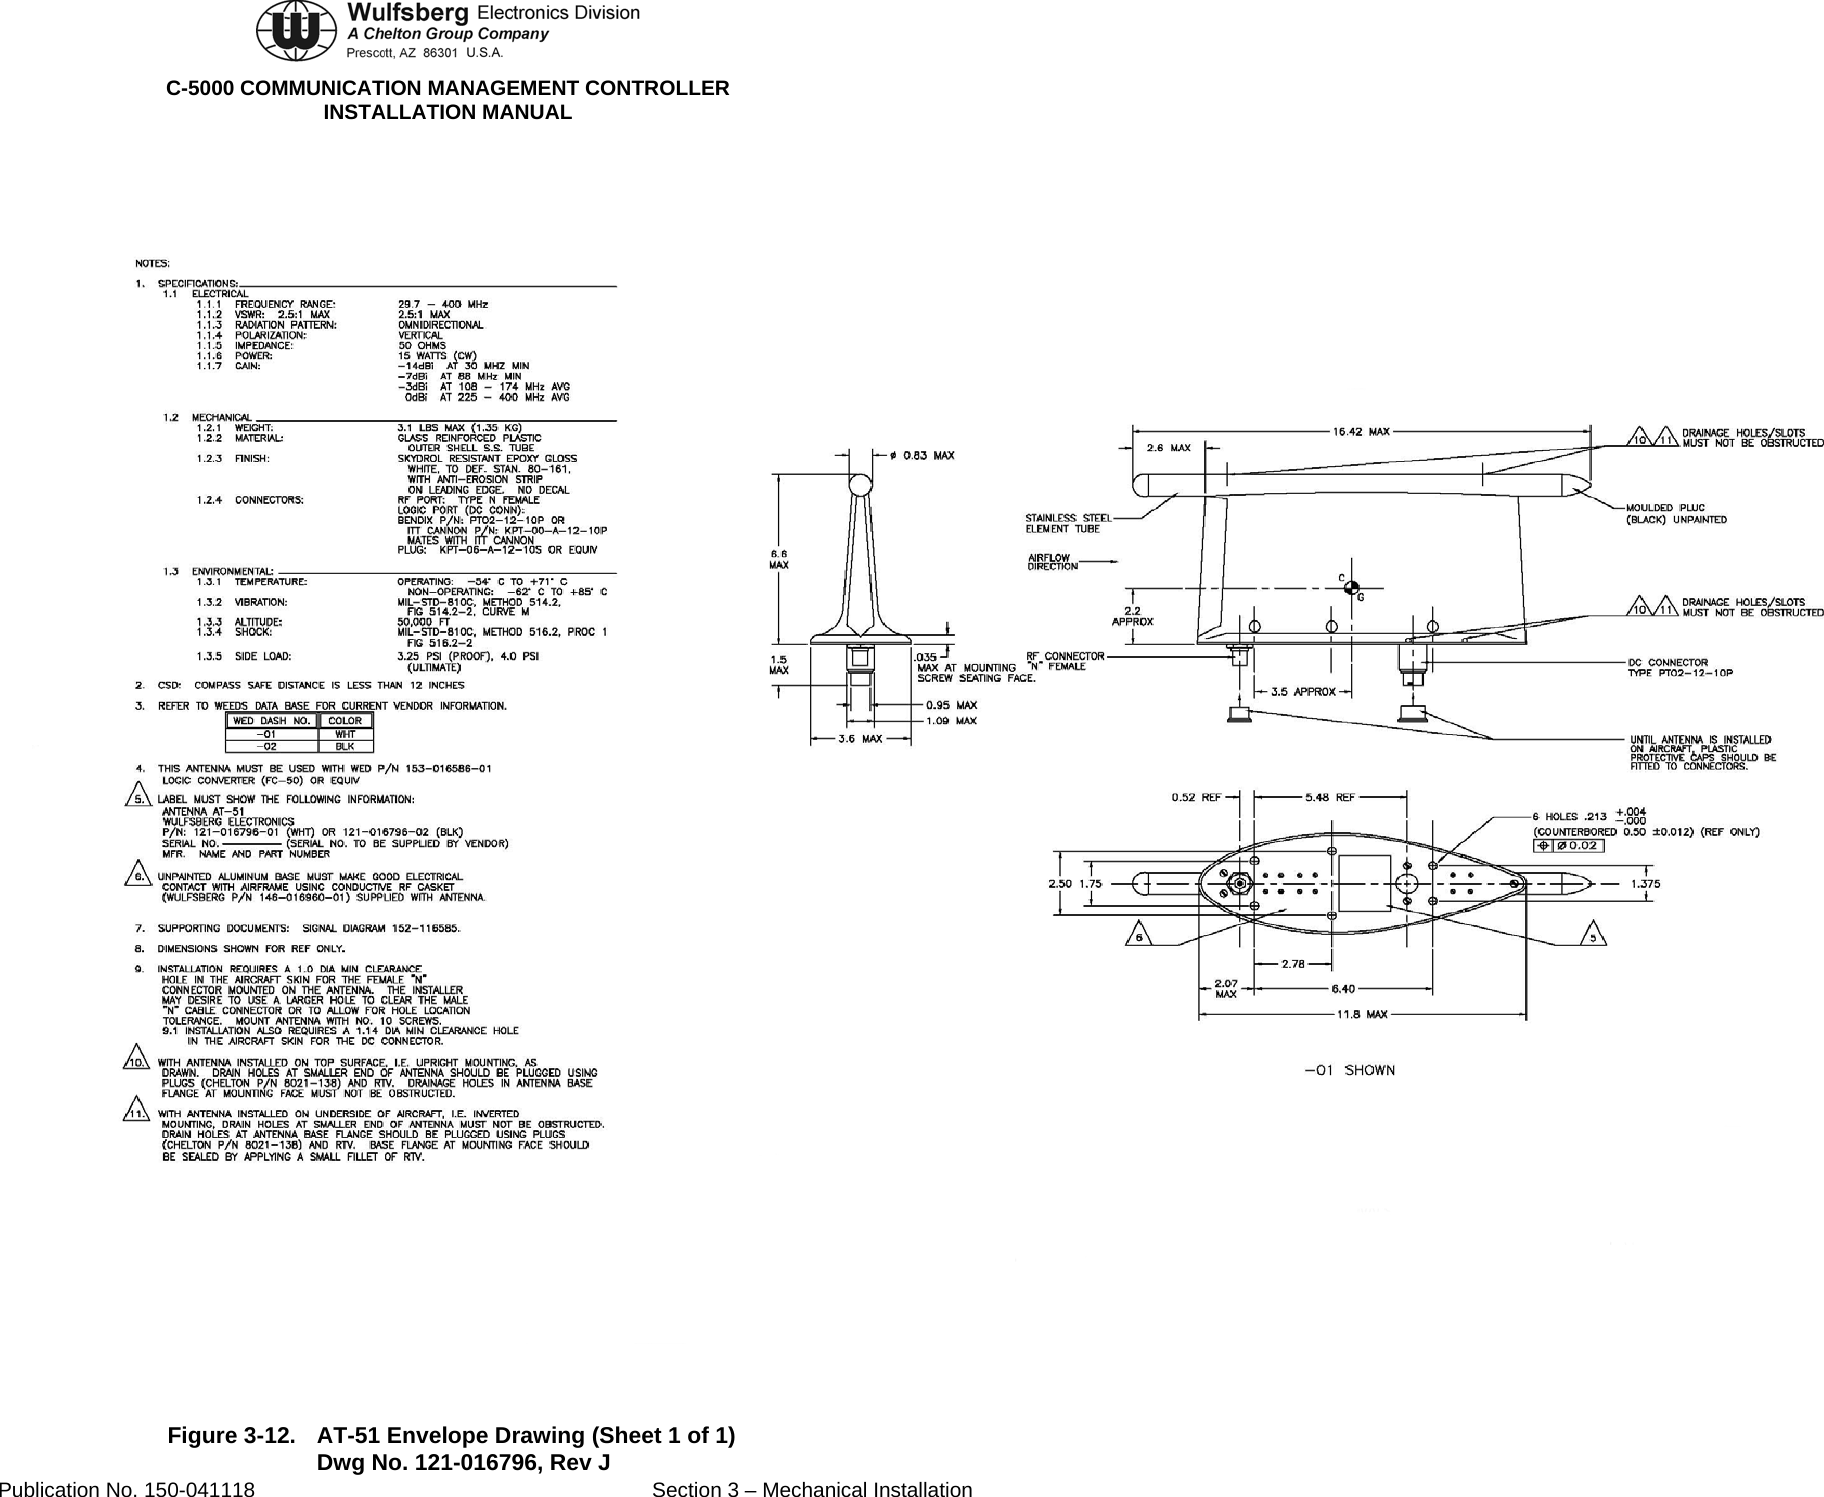  C-5000 COMMUNICATION MANAGEMENT CONTROLLER INSTALLATION MANUAL  Figure 3-12.  AT-51 Envelope Drawing (Sheet 1 of 1) Publication No. 150-041118  Section 3 – Mechanical Installation Dwg No. 121-016796, Rev J 